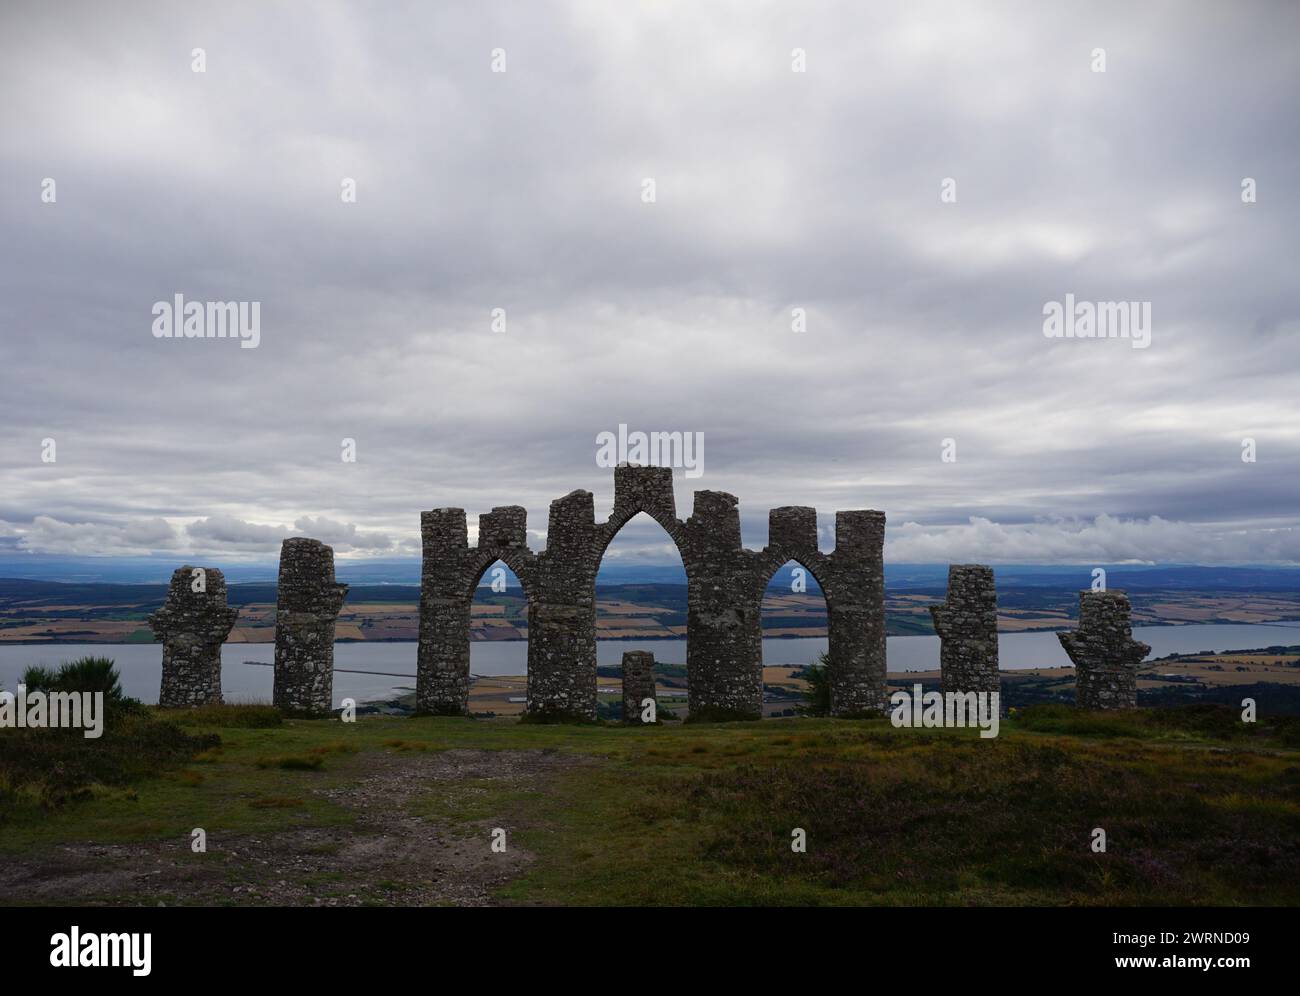 Fyrish Monument, Scotland. Built in 1782, it dominates a landscape of the Scottish highlands. Stock Photo